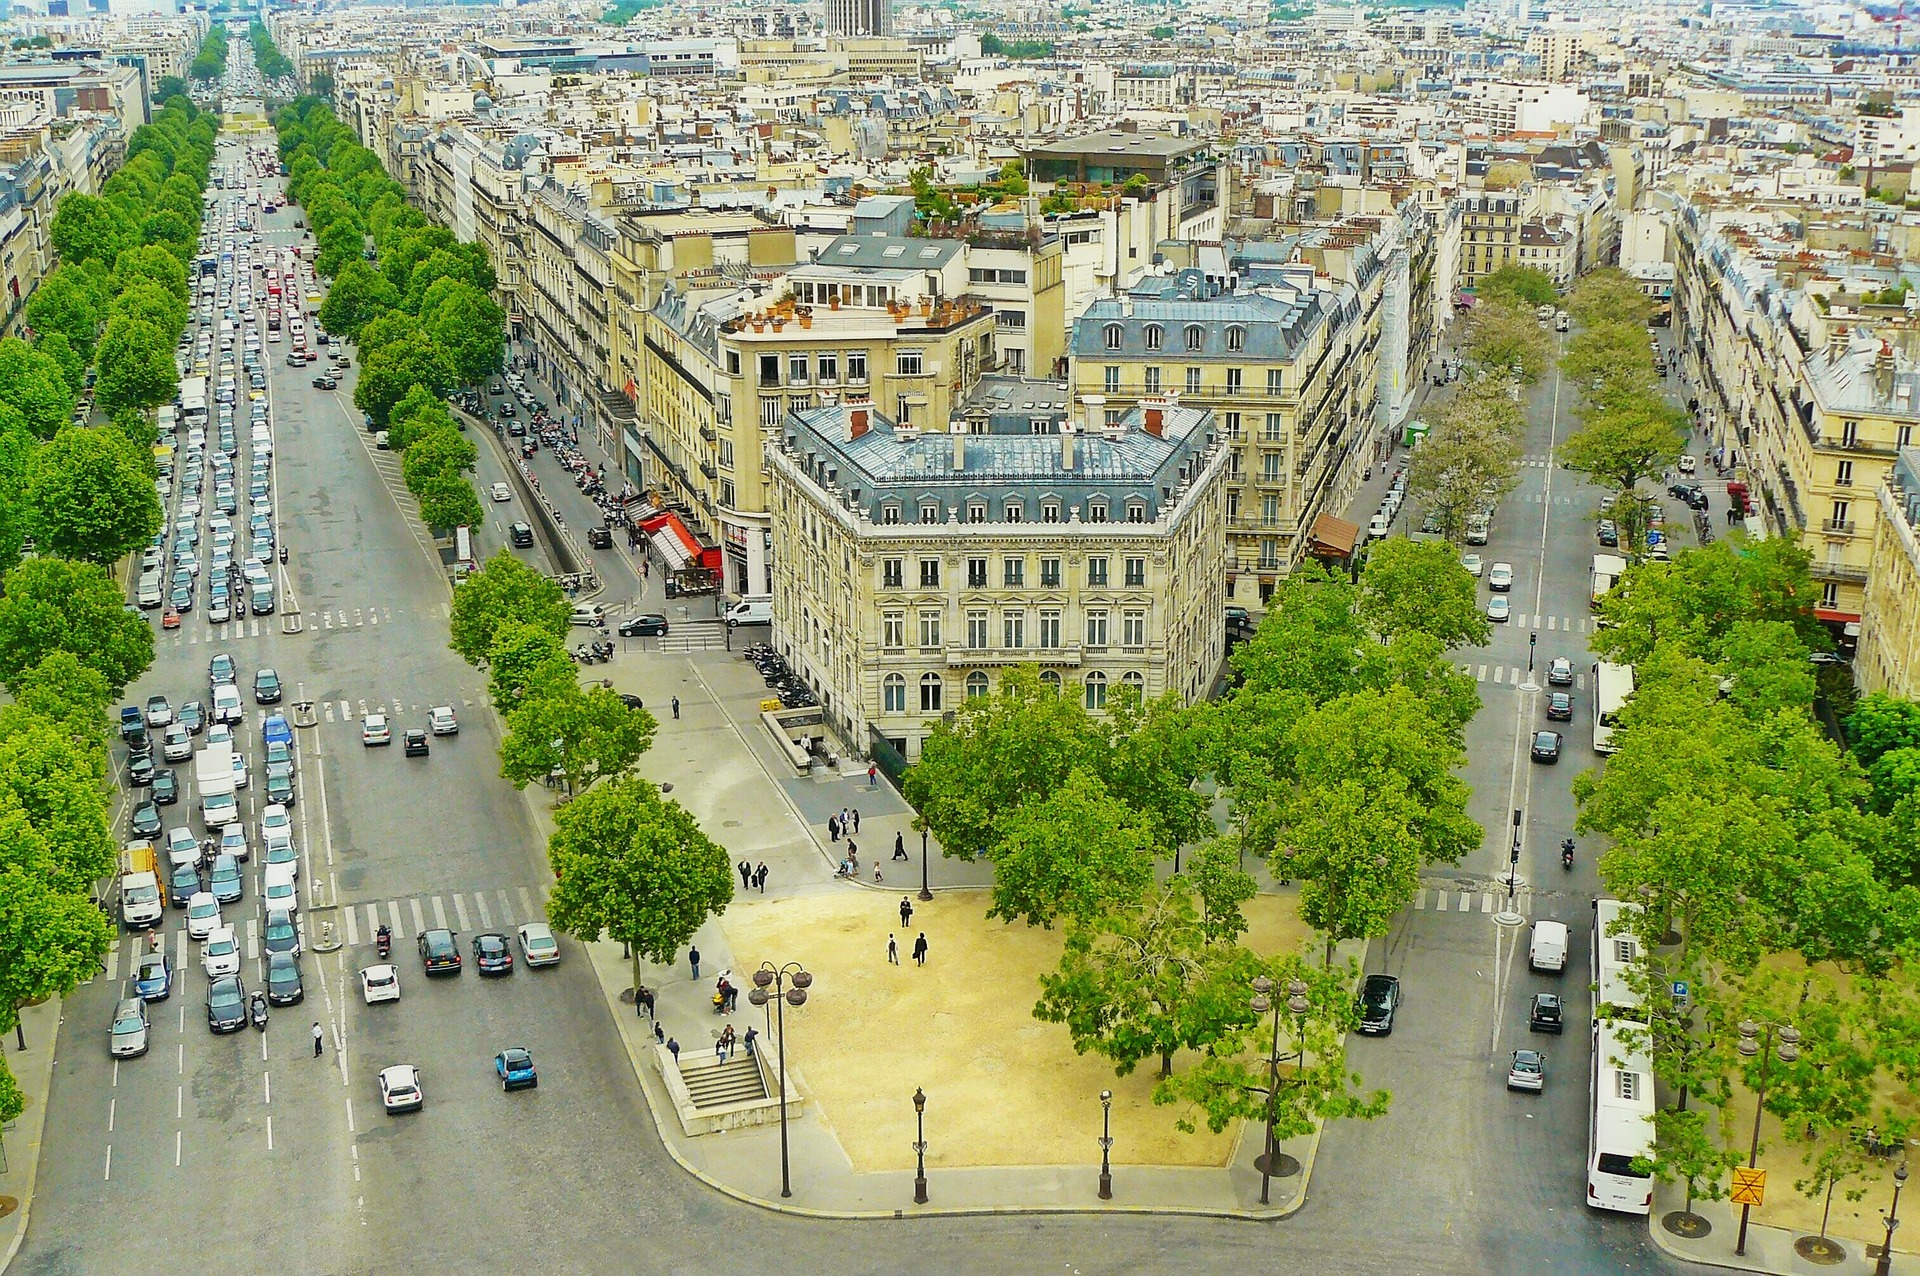 Paris. (Pixabay License).